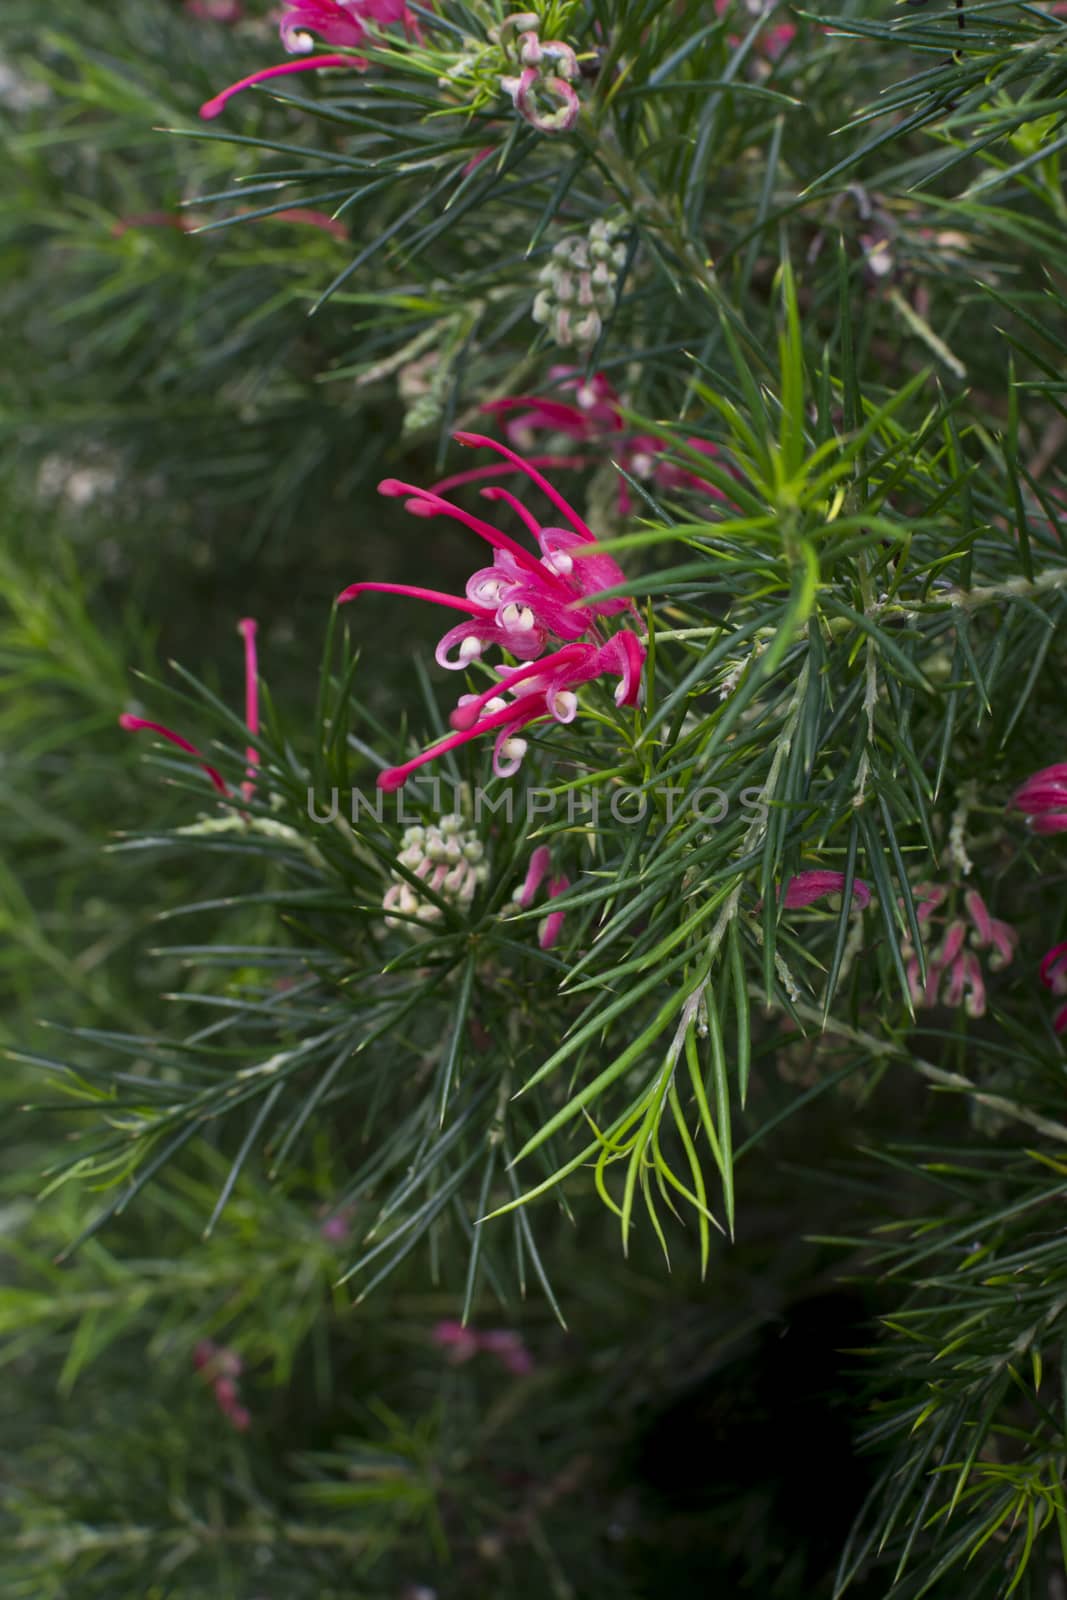 Juniper grevillea with pink flowers. by ArtesiaWells